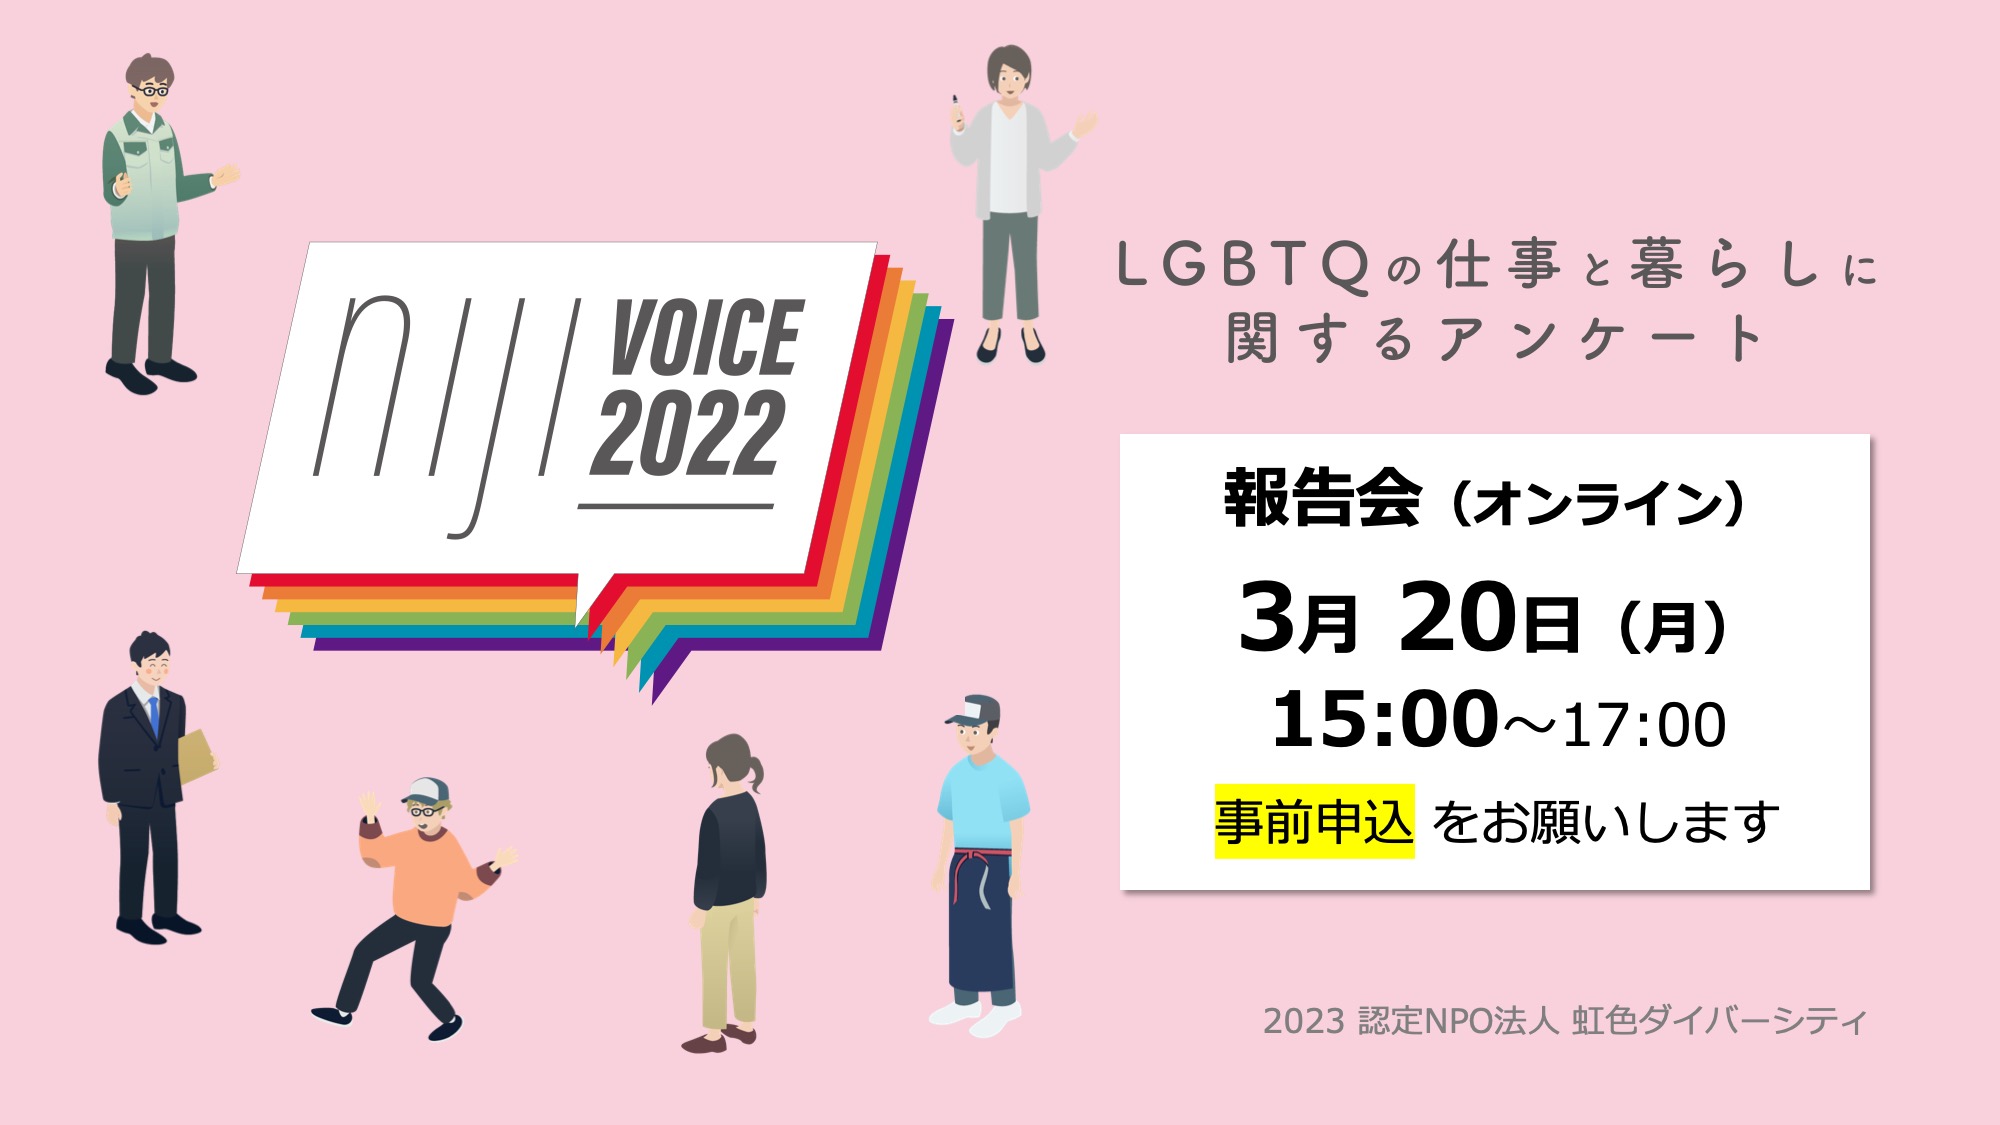 LGBTQの仕事と暮らしに関するアンケート nijiVOICE報告会